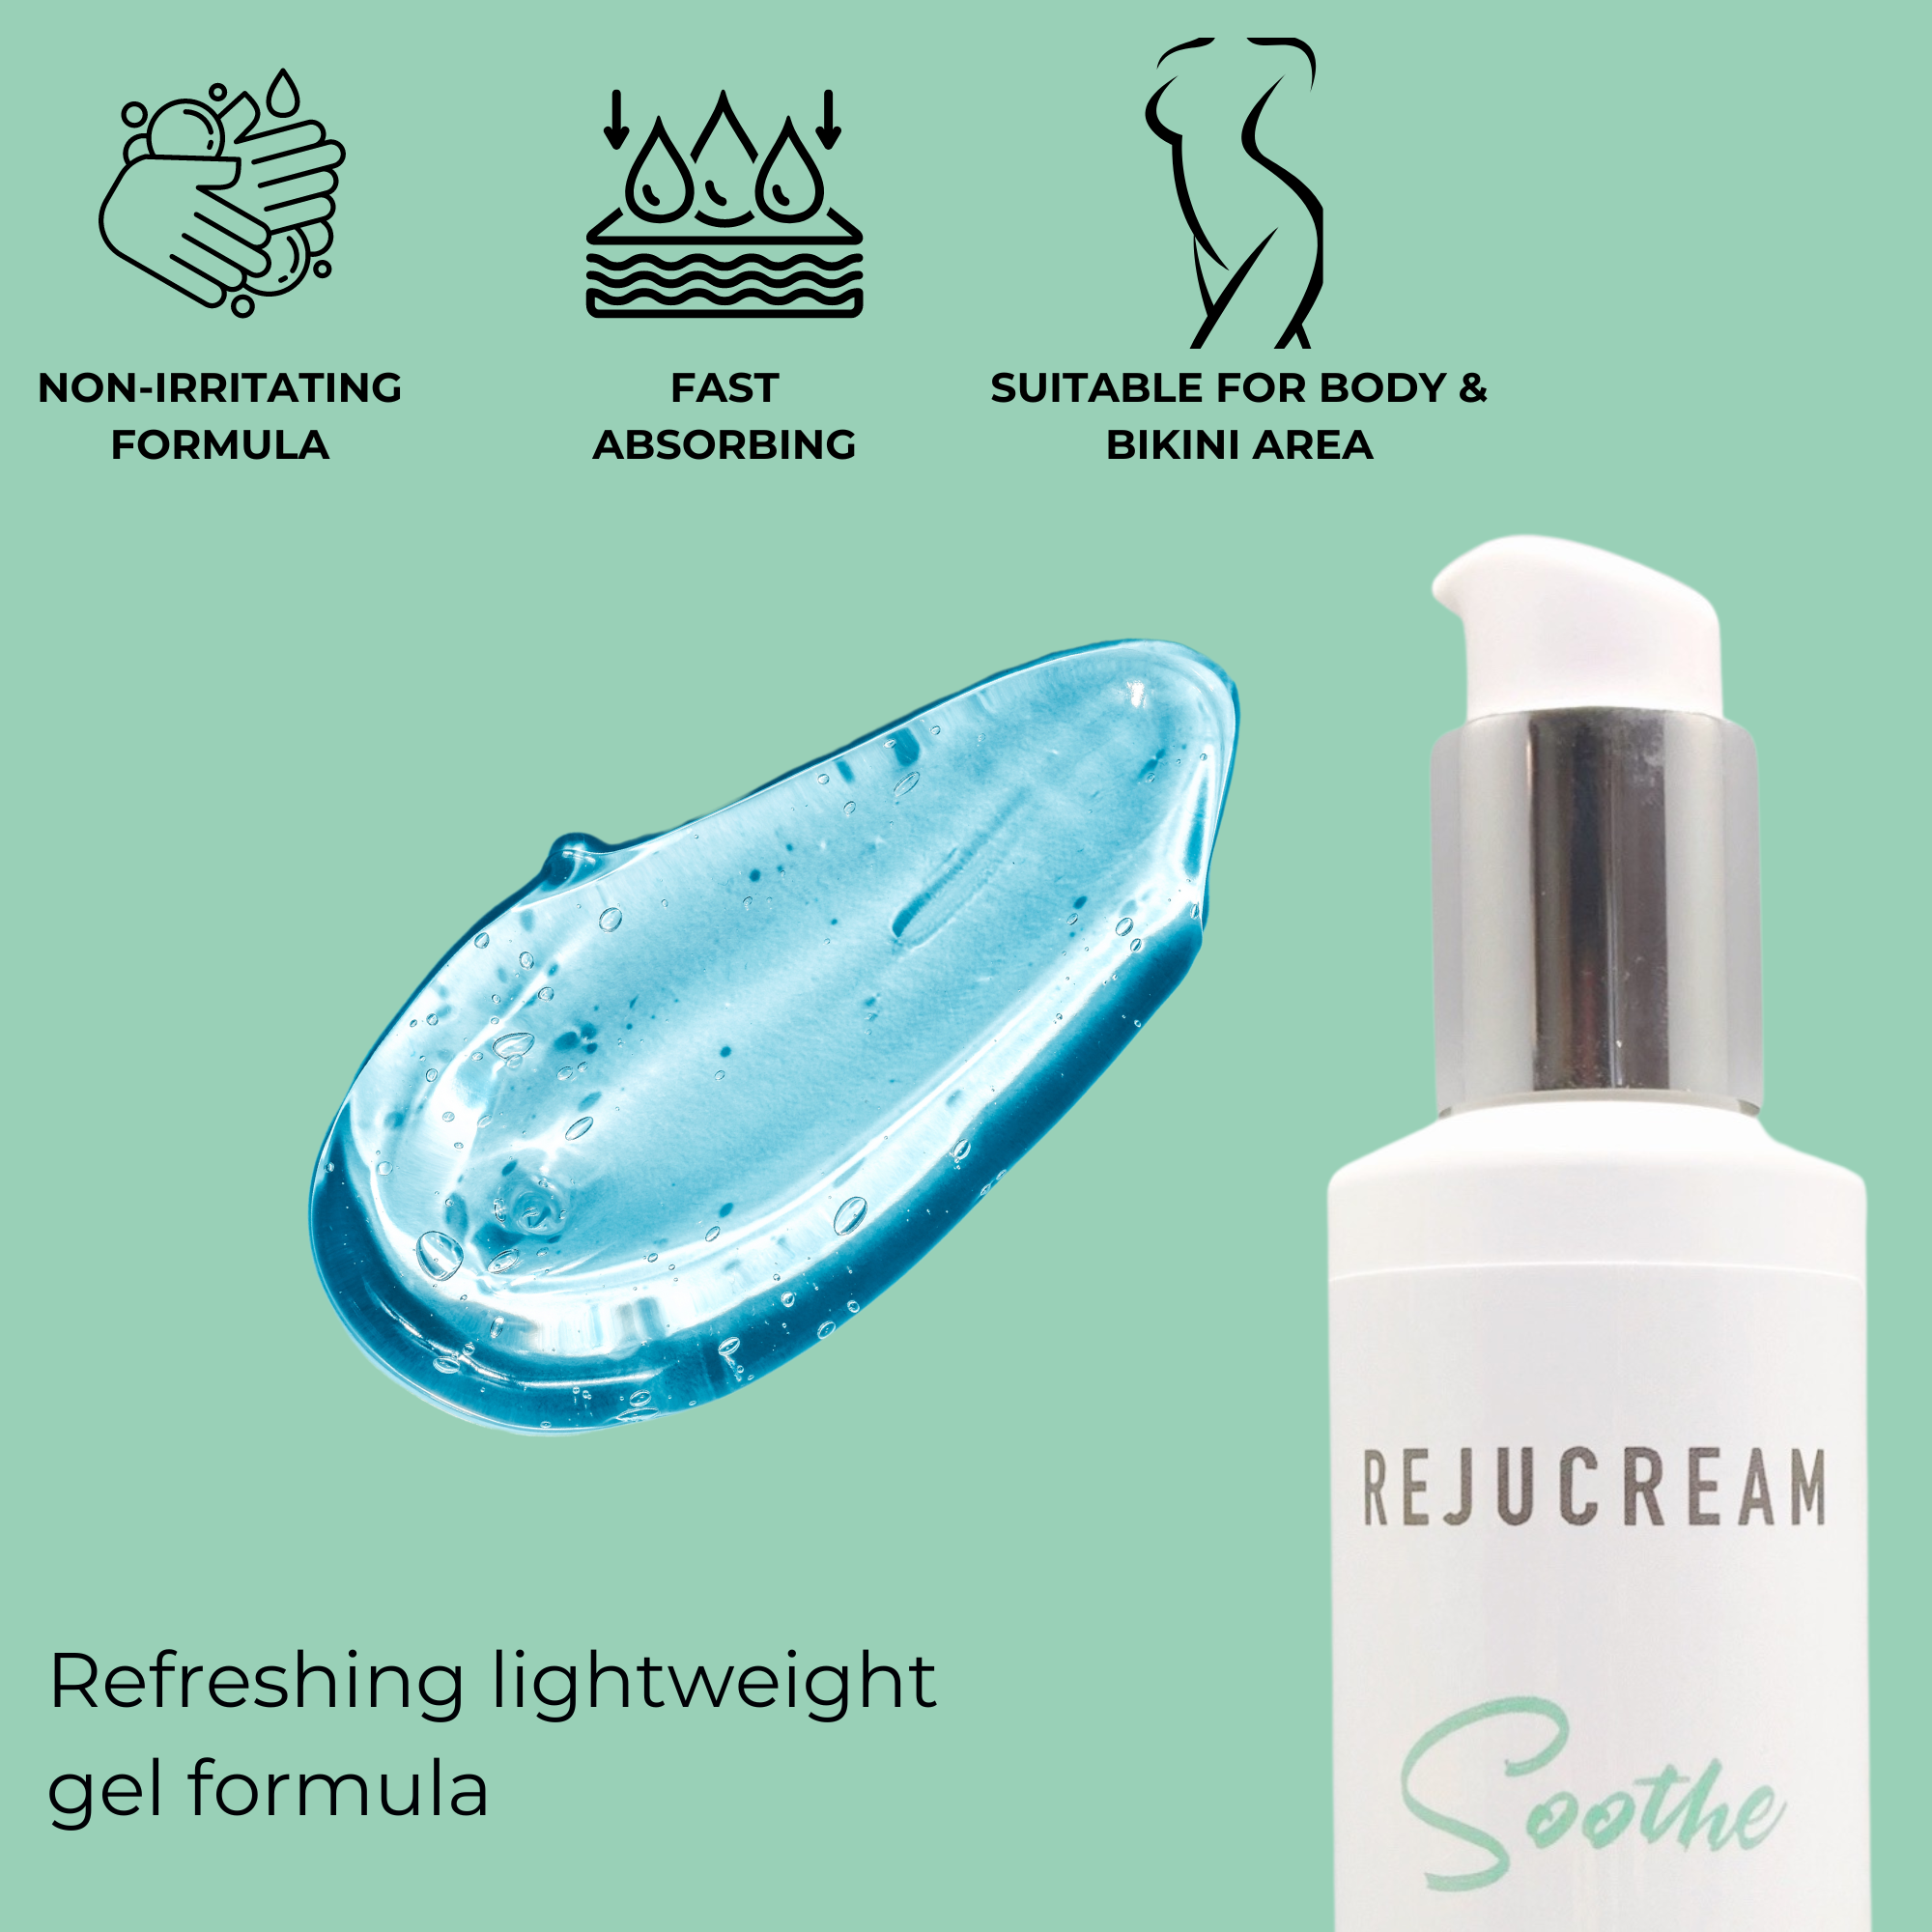 key benefits of rejuvenate intimate revitalizing cream include nourishing, hydrating, plumping and tightening the vulva